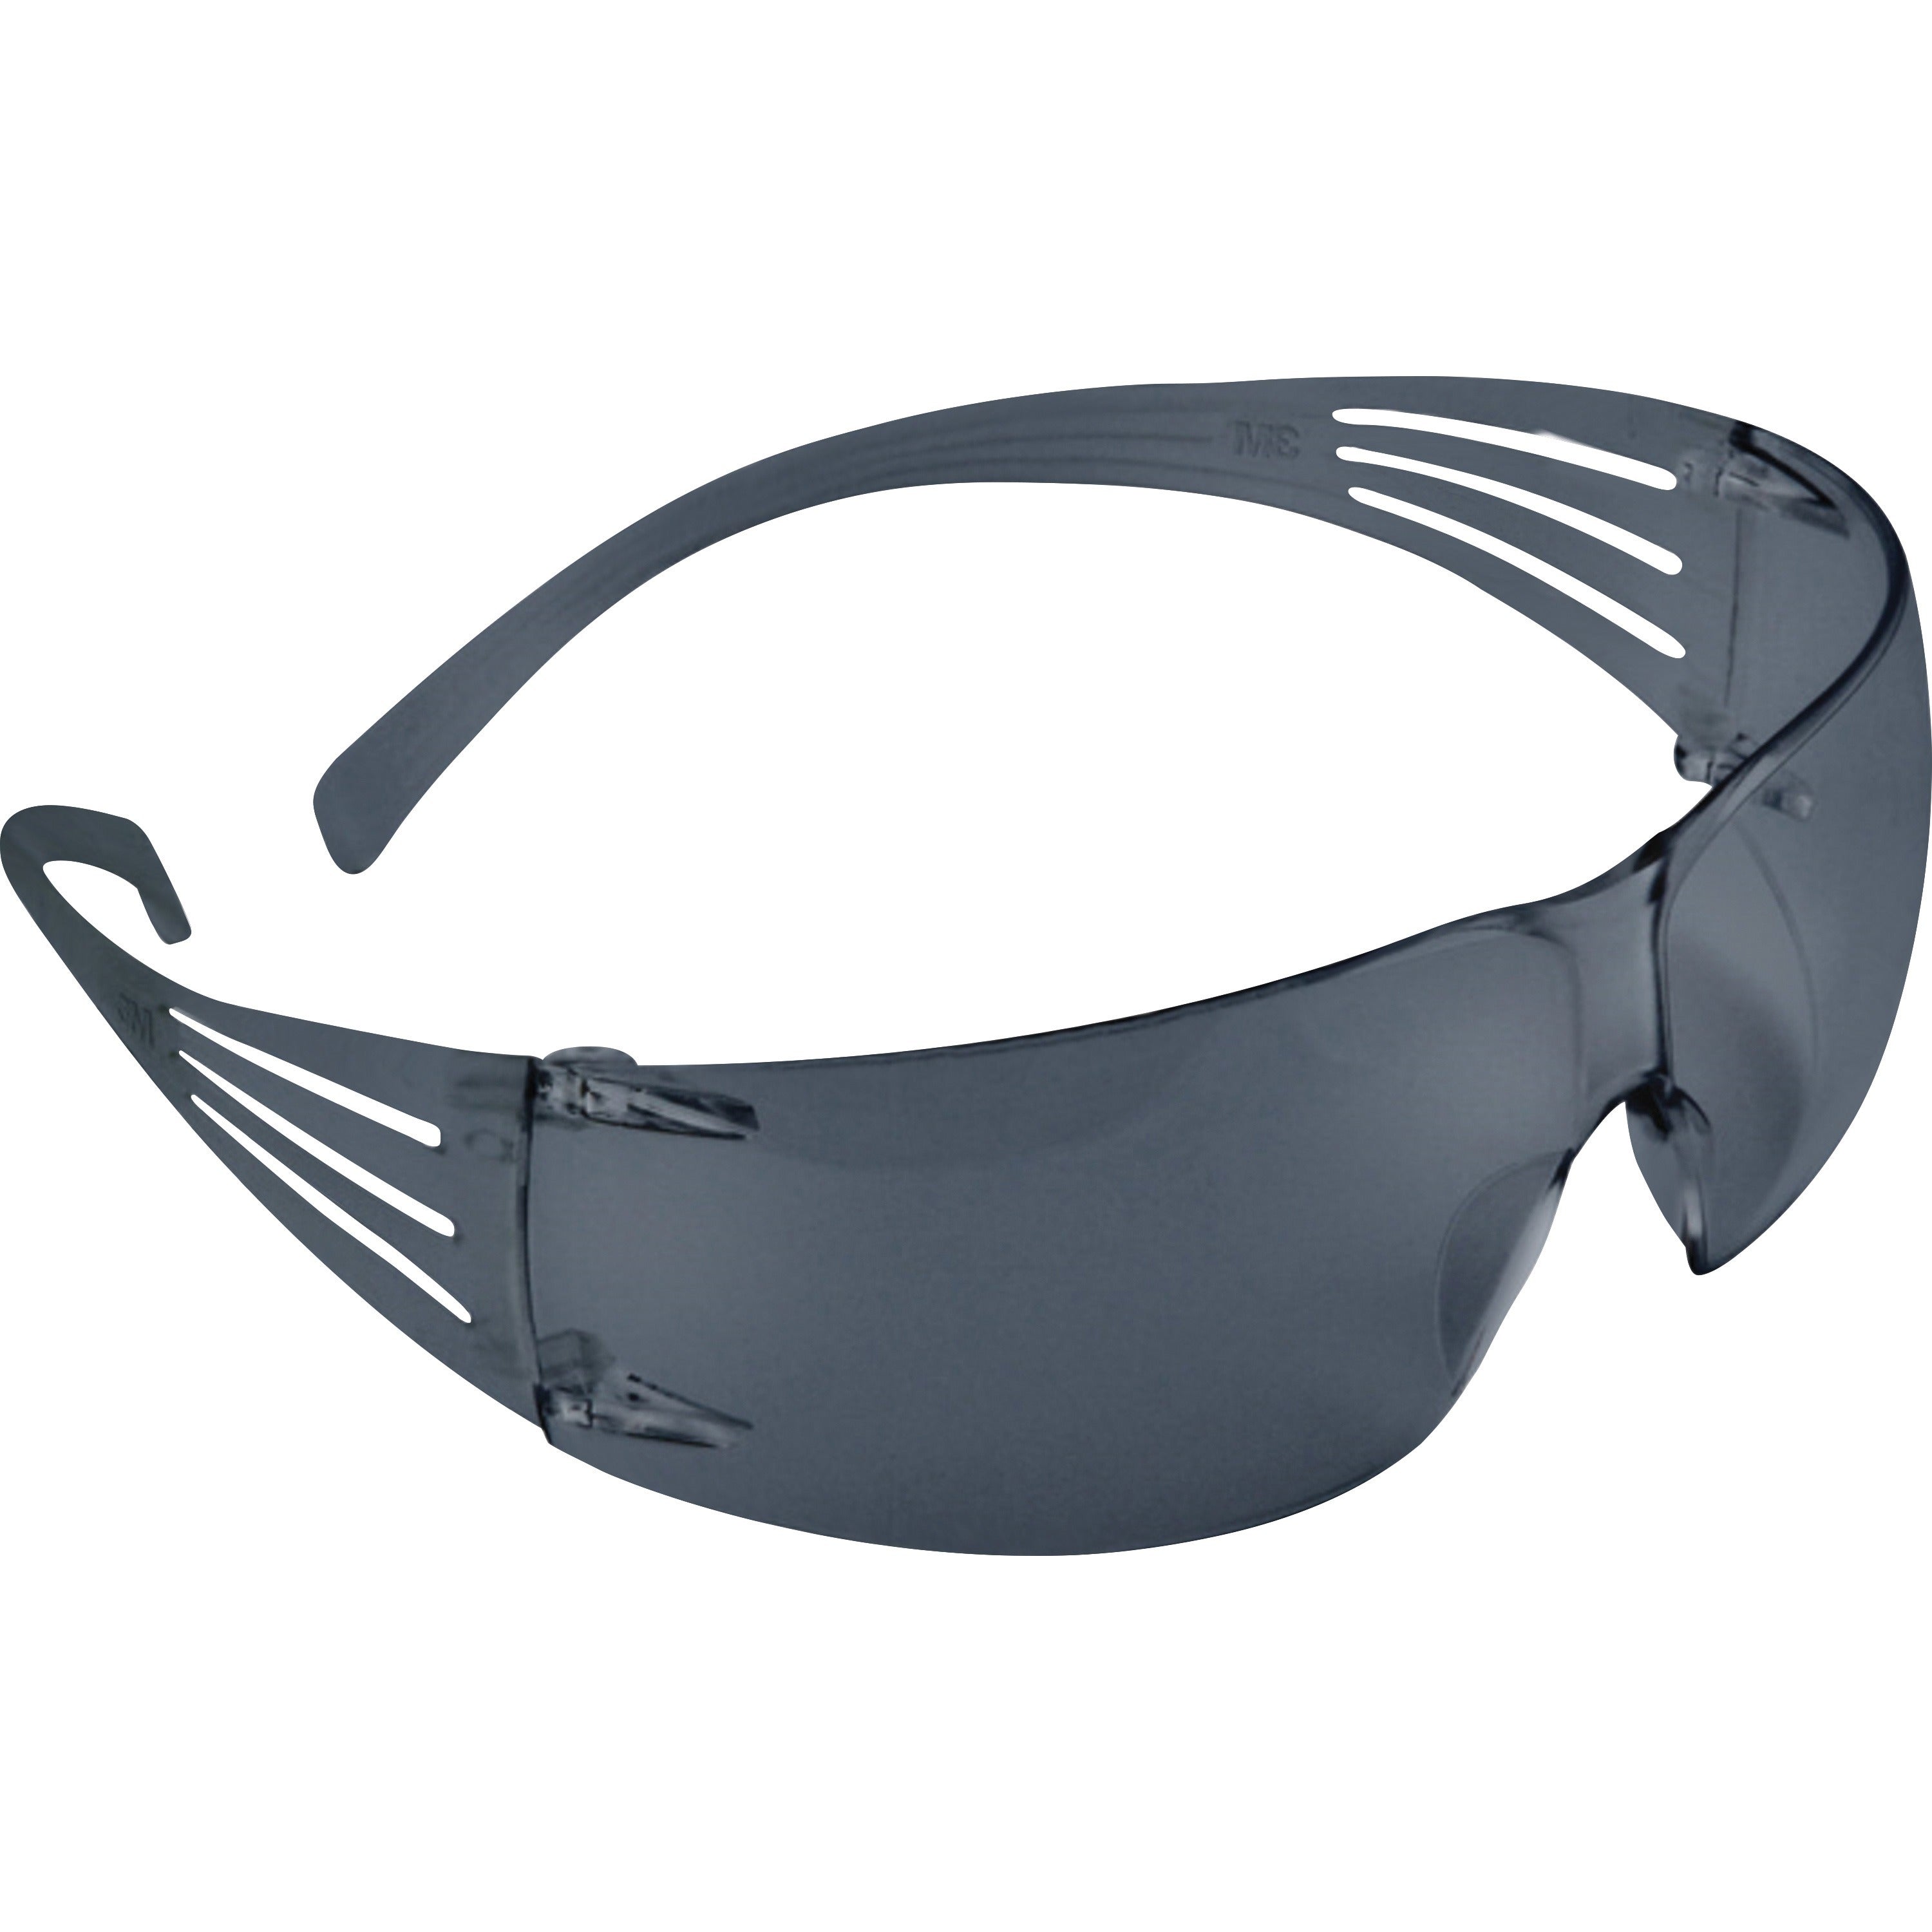 3m-securefit-protective-eyewear-ultraviolet-protection-1-each_mmmsf202af - 1